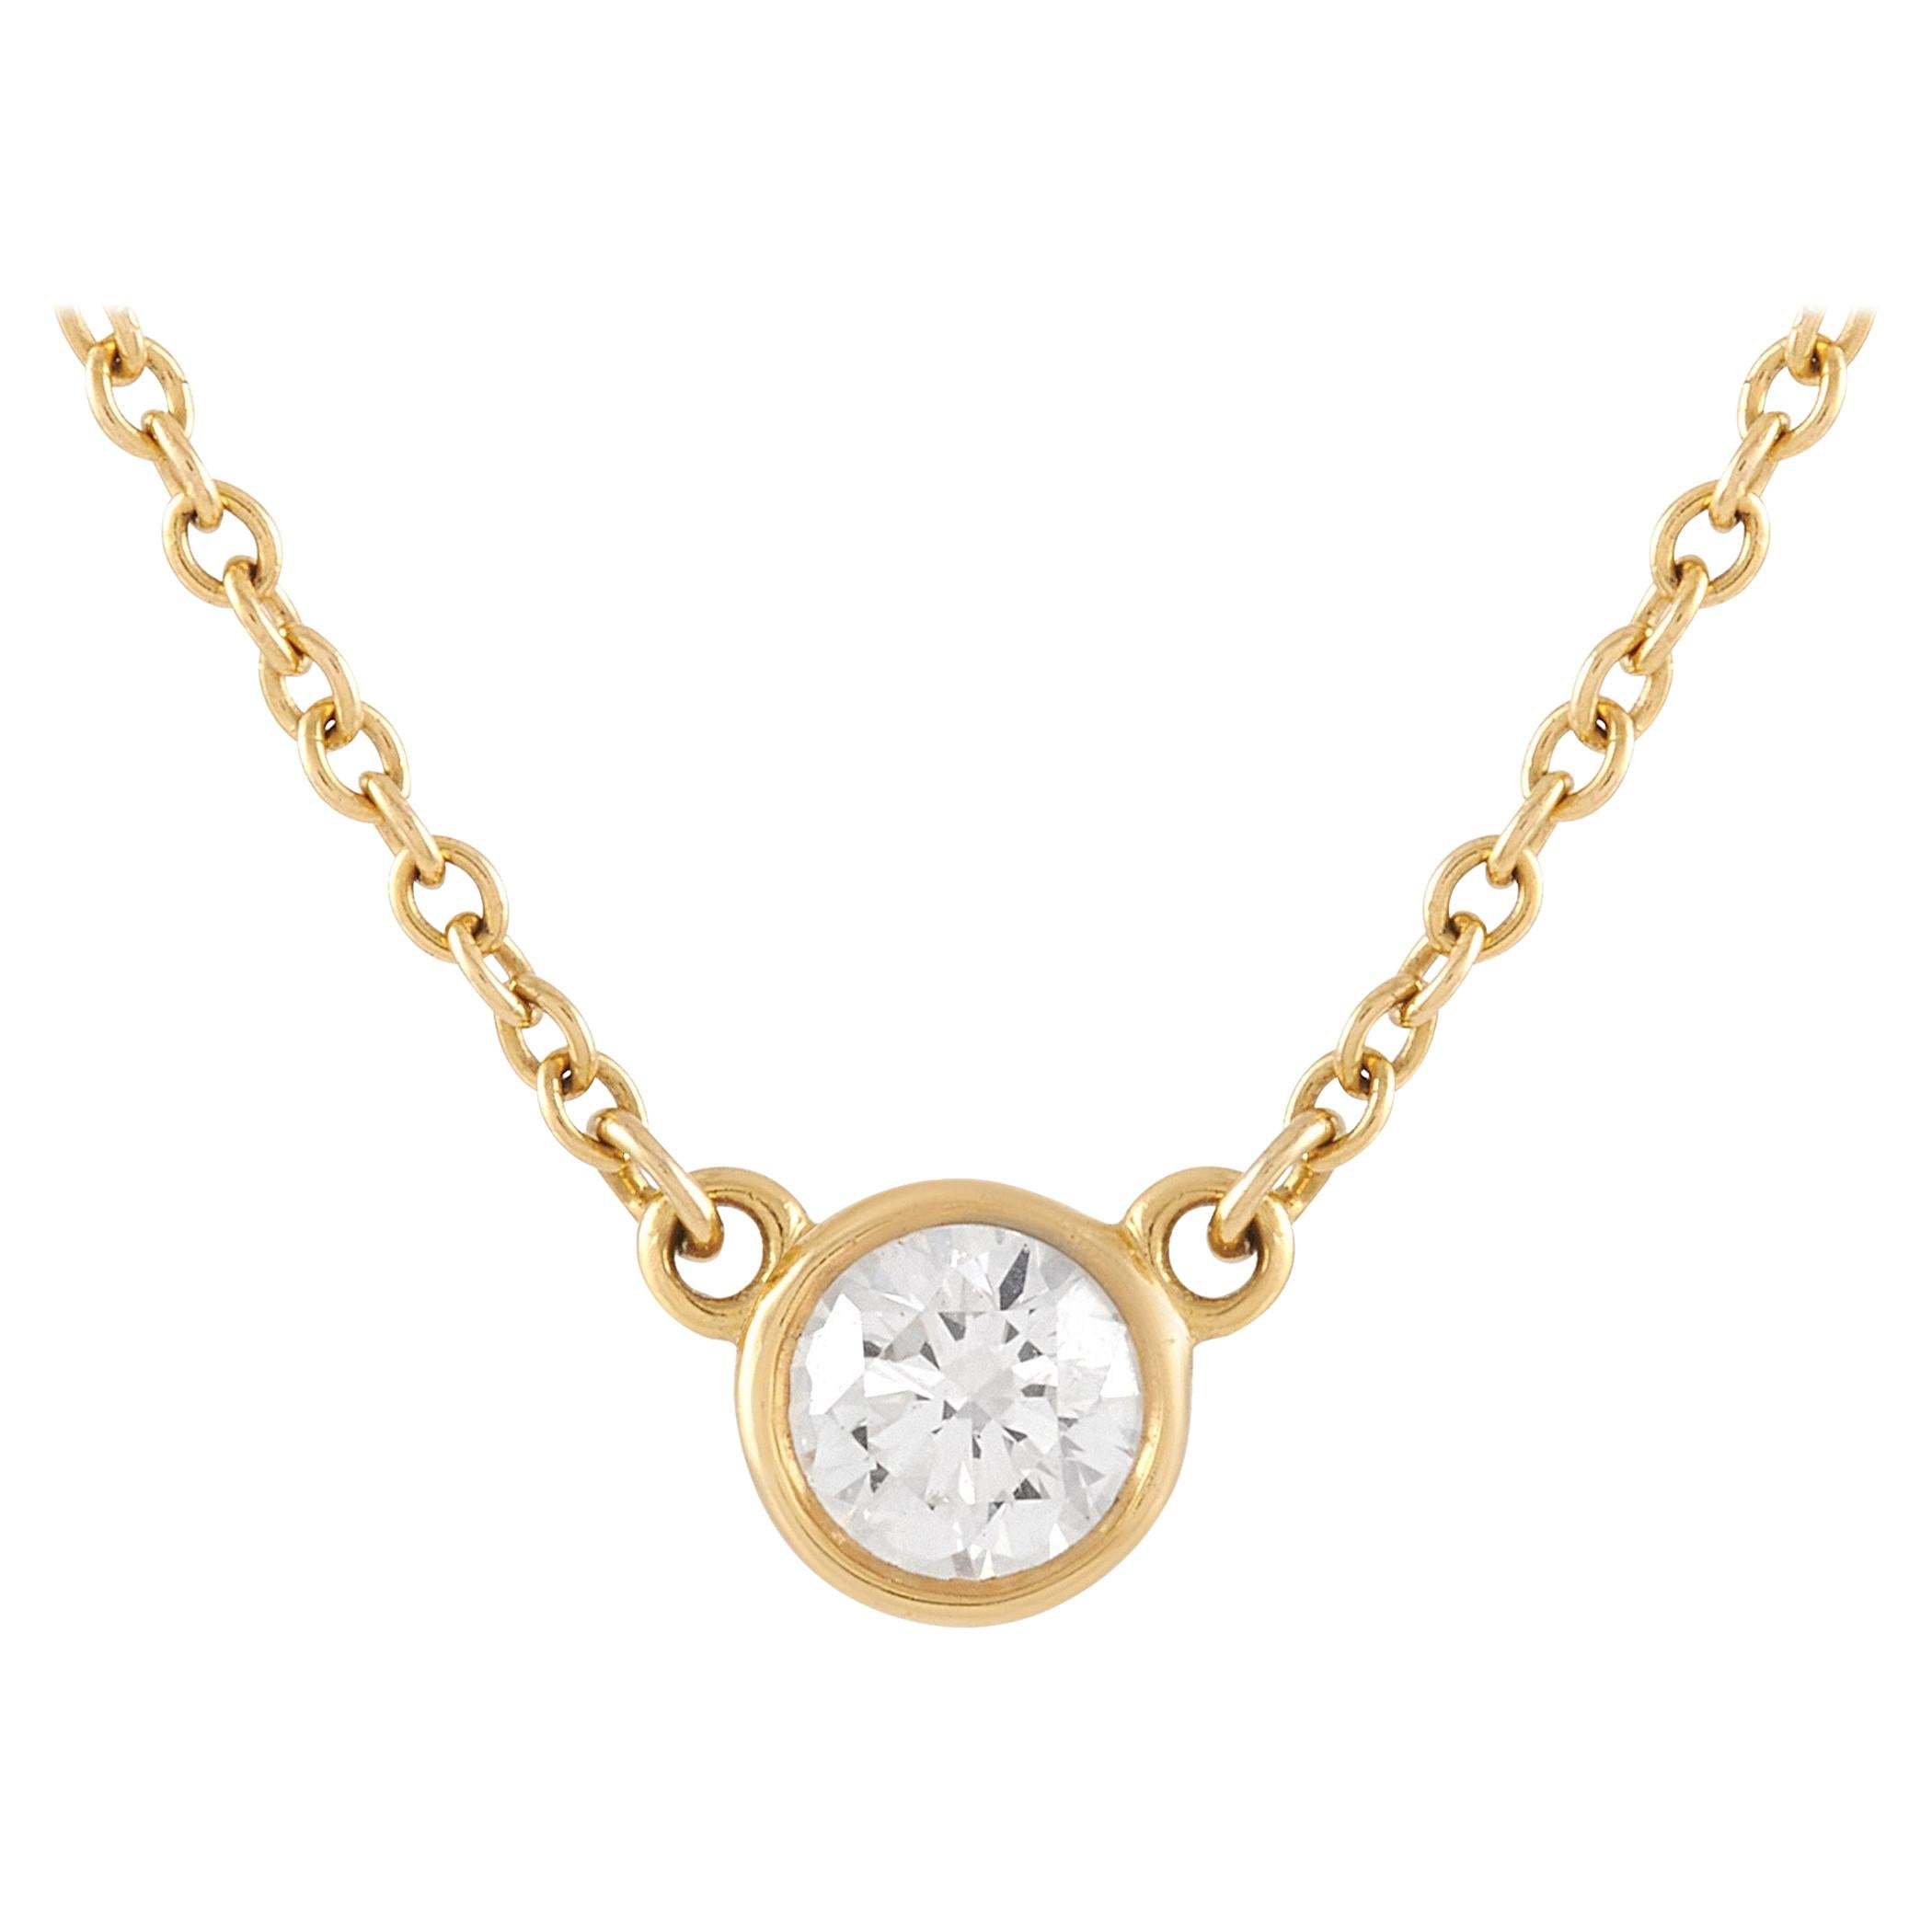 Tiffany & Co. 18 Karat Yellow Gold 0.20 Carat Solitaire Diamond Pendant Necklace